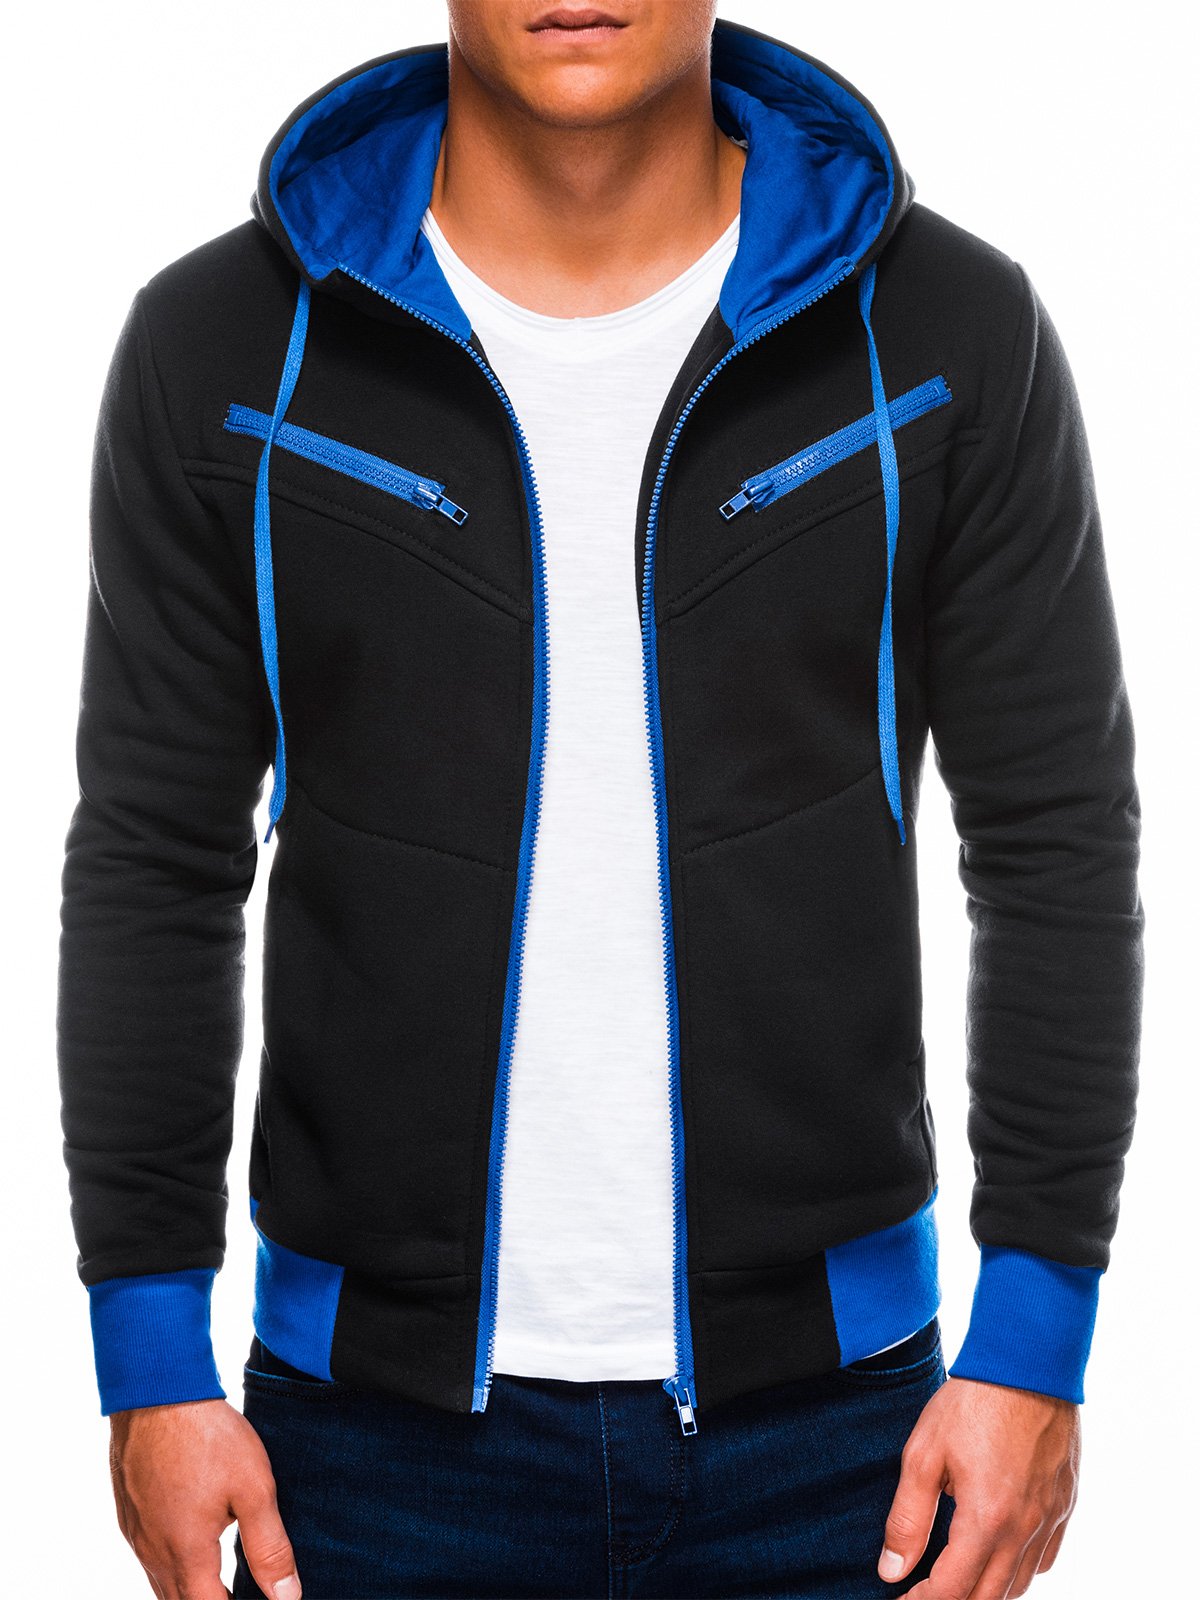 Men's zip-up hoodie AMIGO - black/blue | MODONE wholesale - Clothing ...